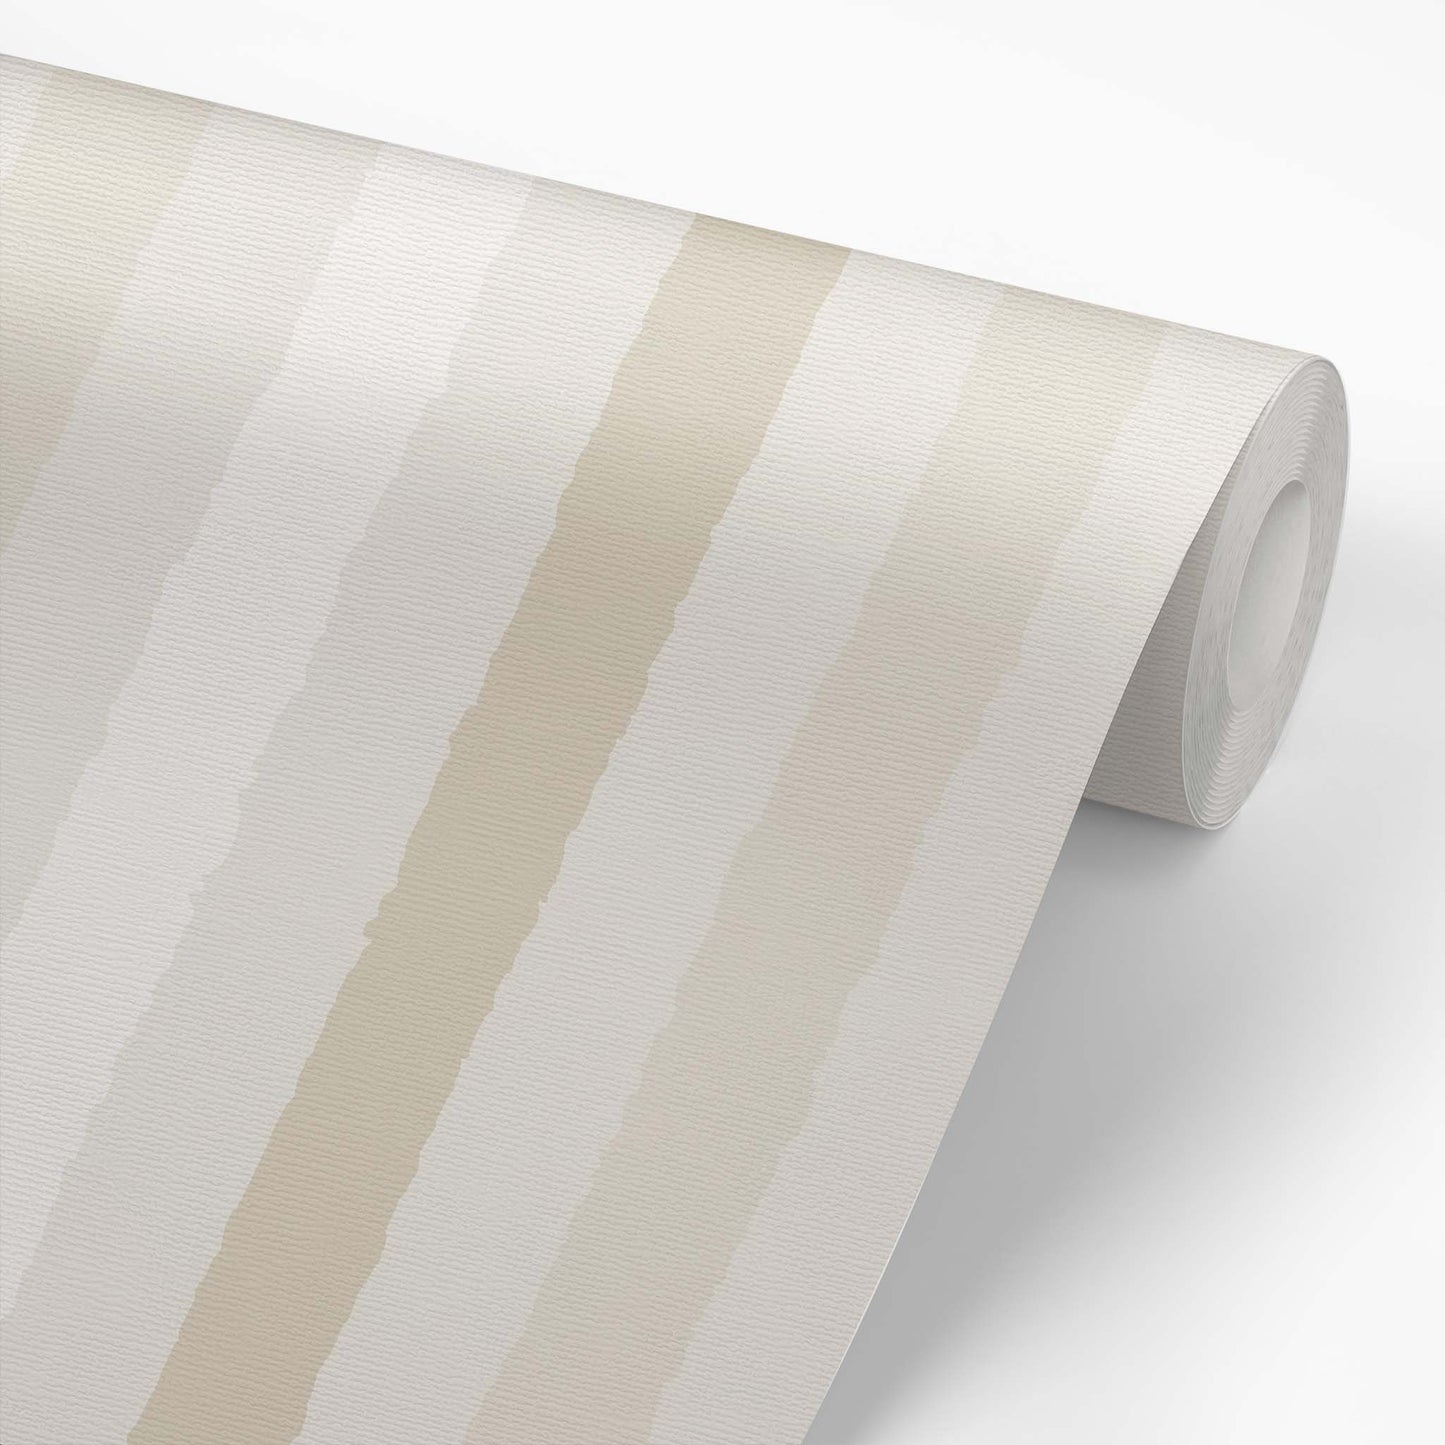 Wallpaper panel featuring Iris + Sea Bold Stripe- Neutral - a striped pattern